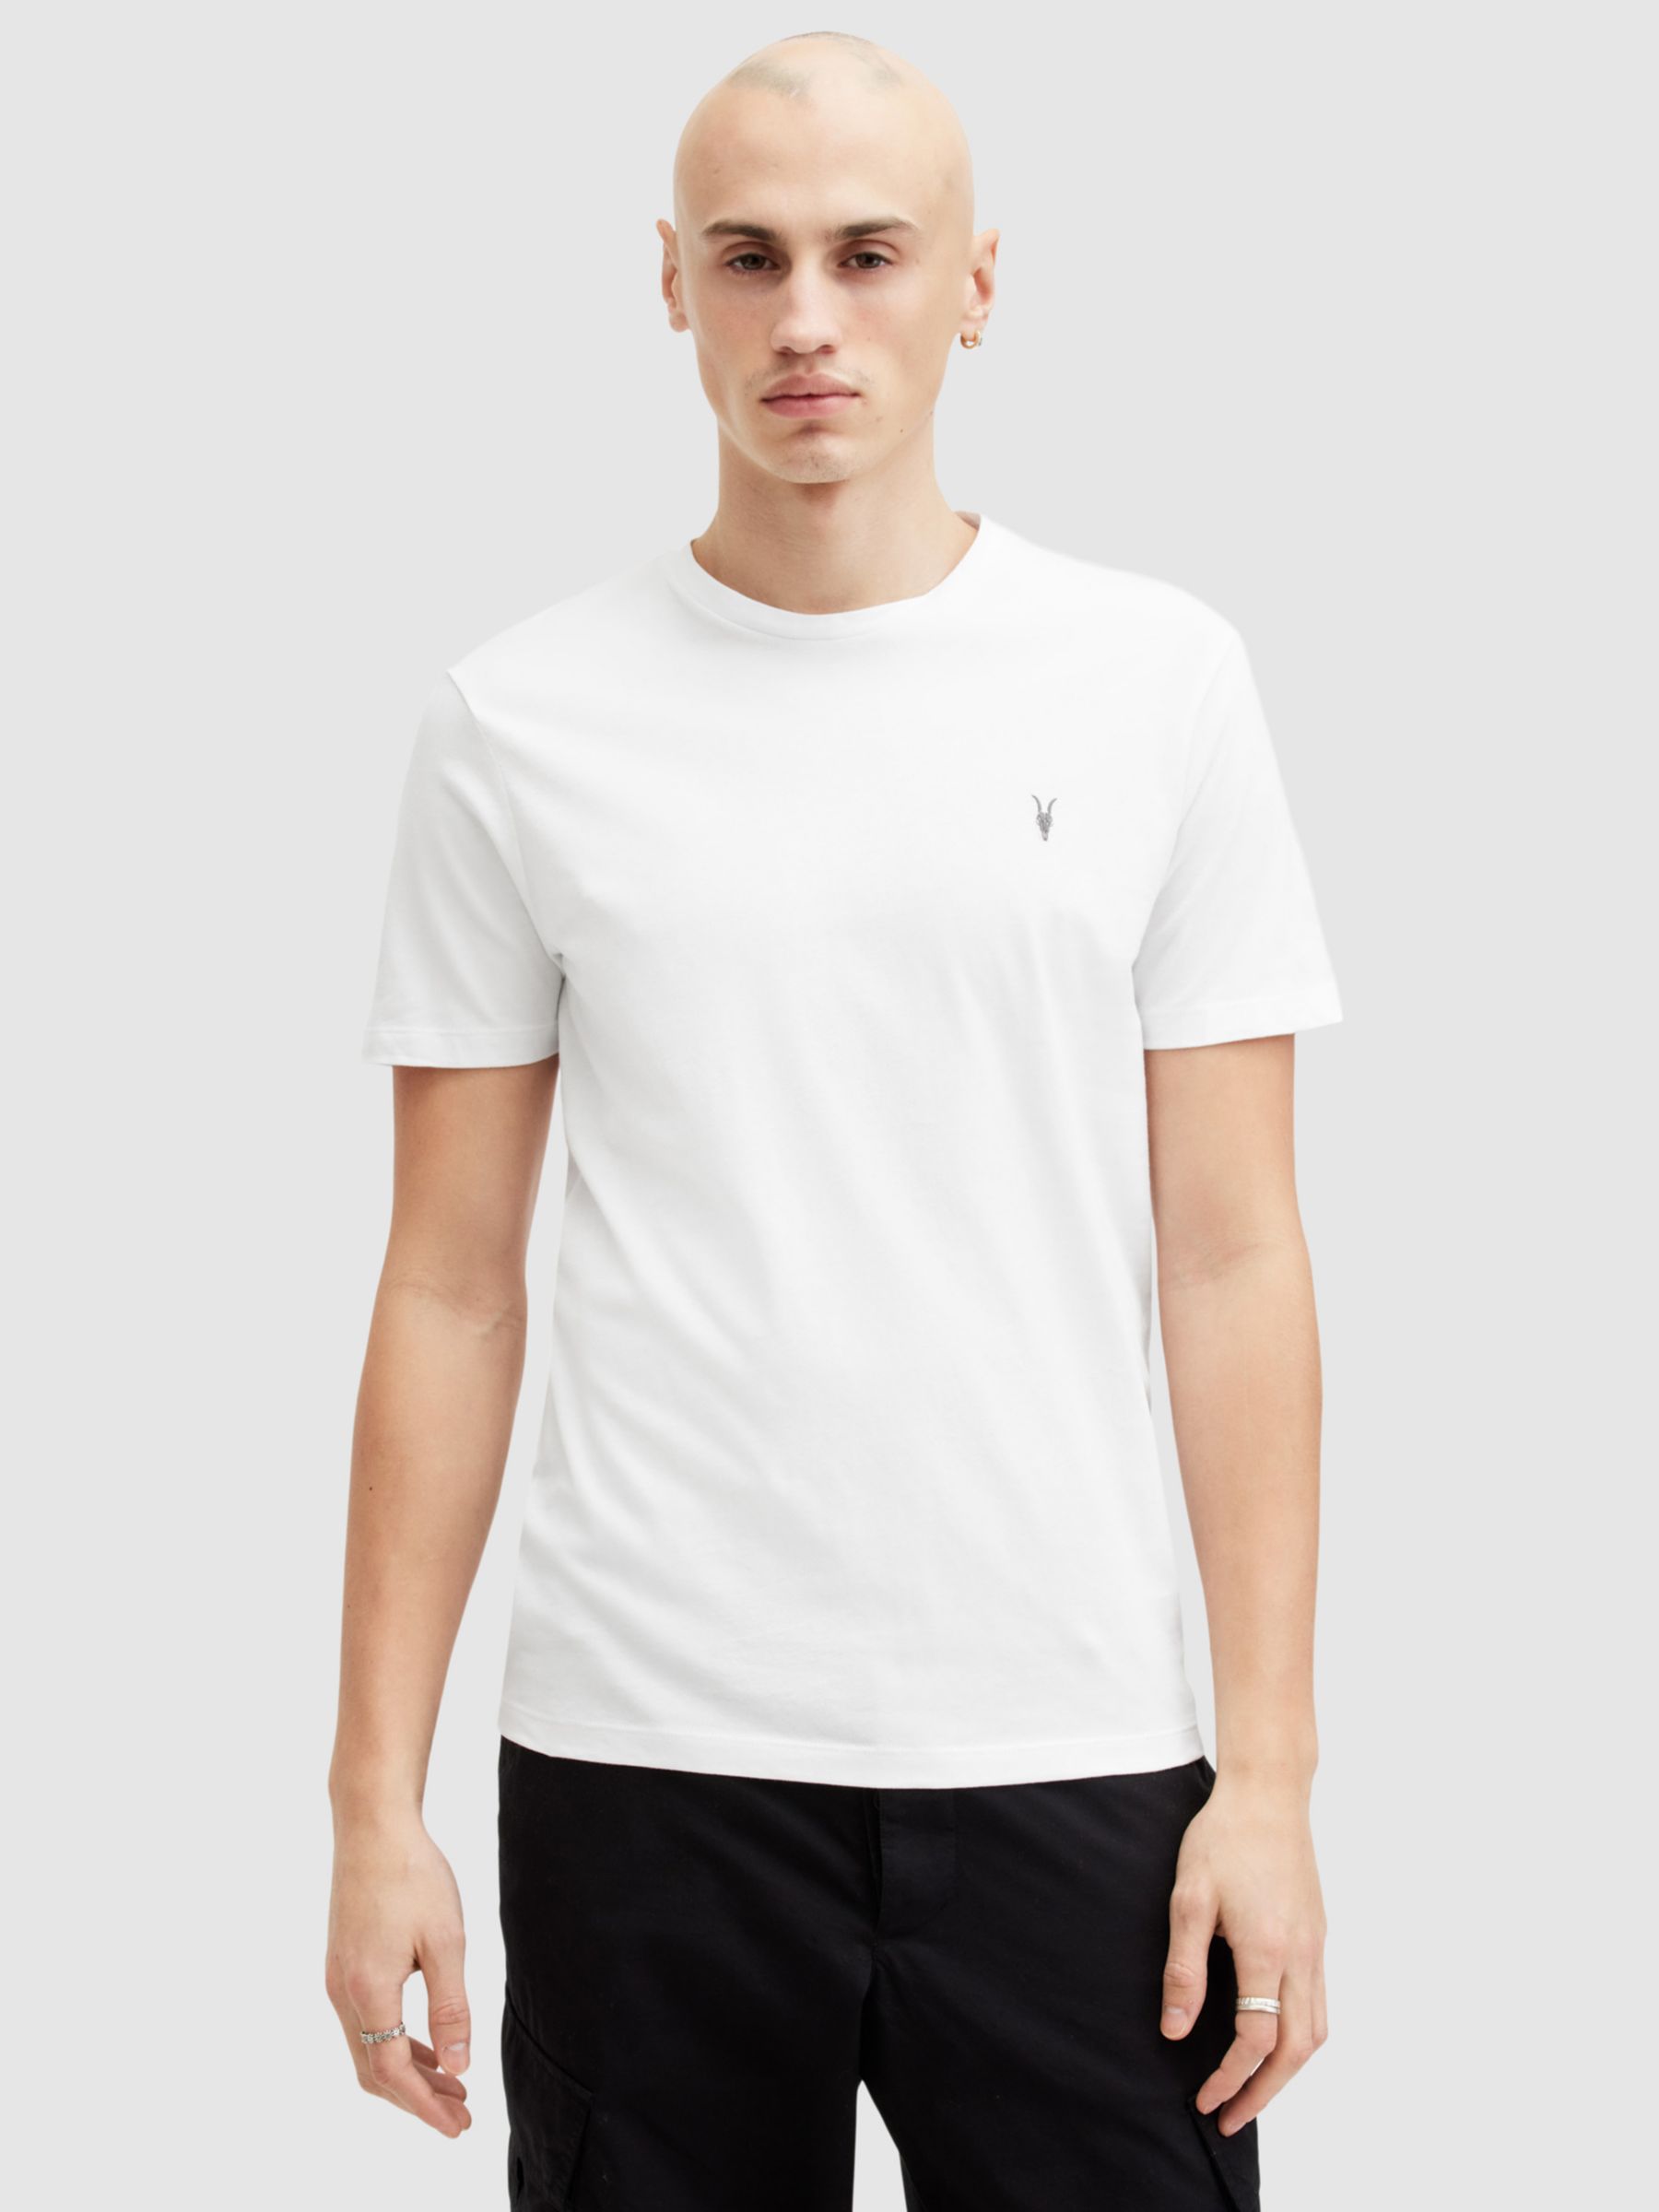 AllSaints Brace Tonic Crew Neck T-Shirts, Pack of 3, Grn/Grn/Opt White, L